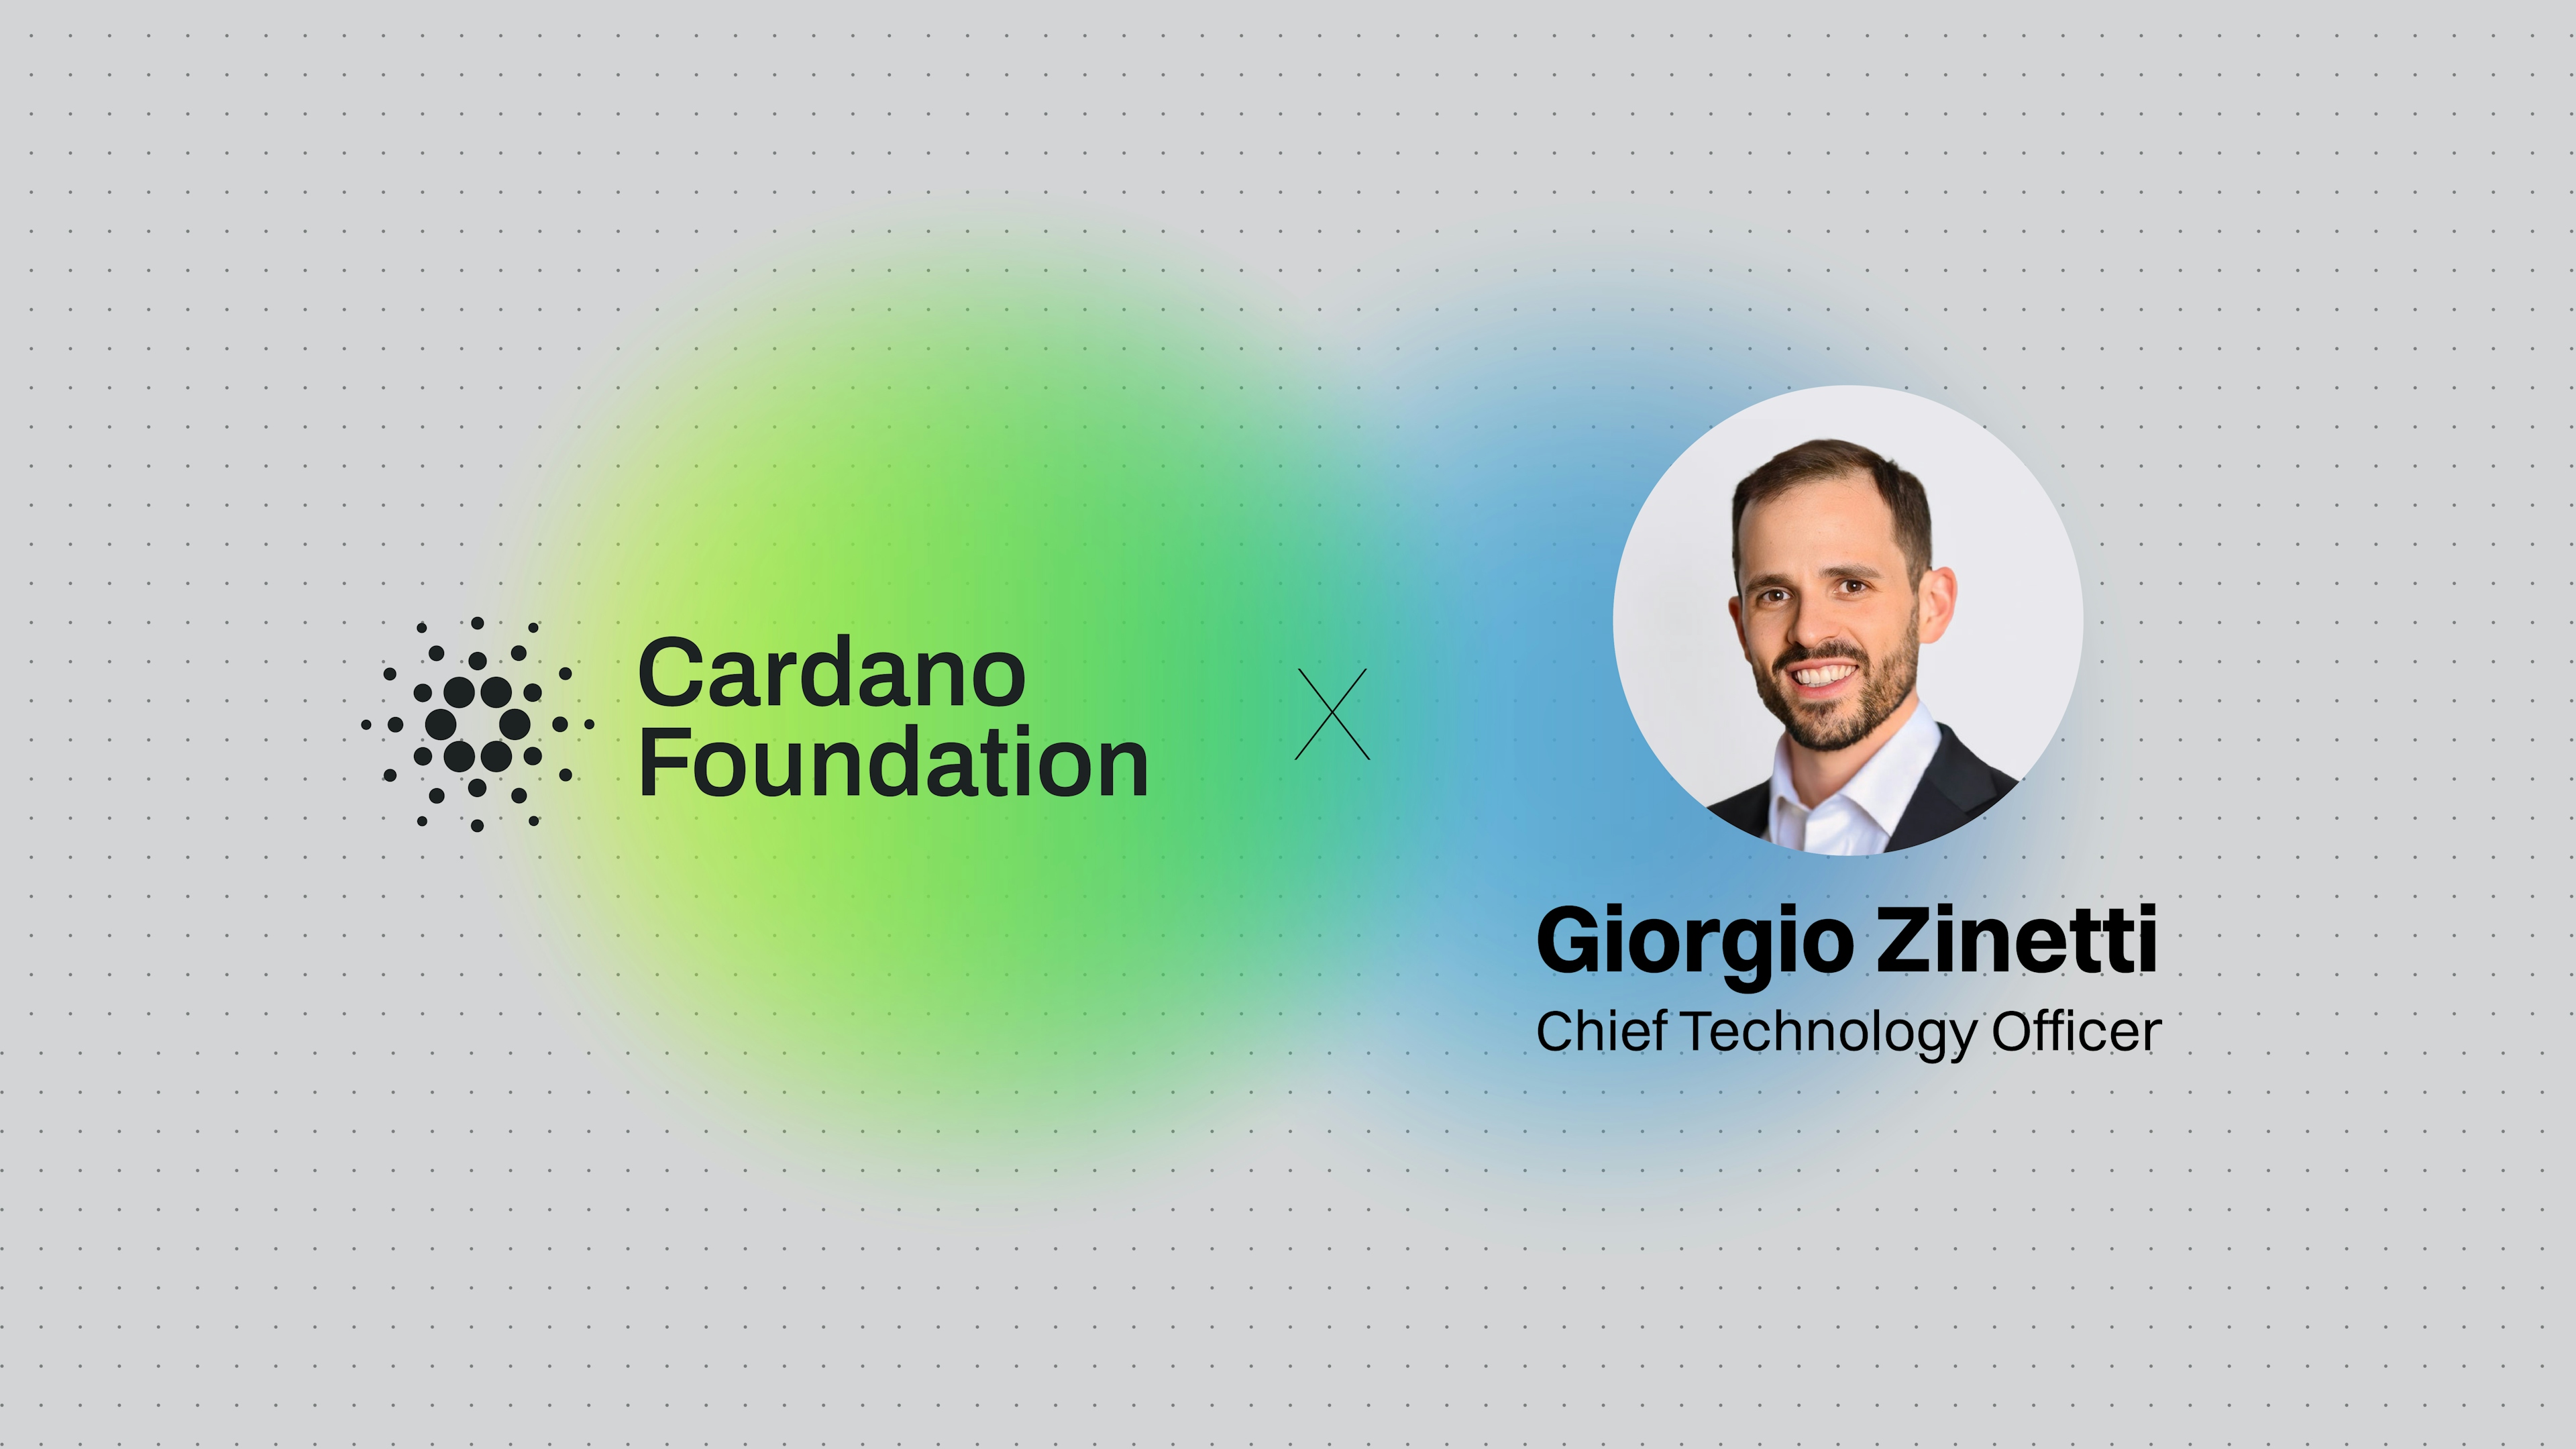 Cardano Foundation Names Giorgio Zinetti as Chief Technology Officer